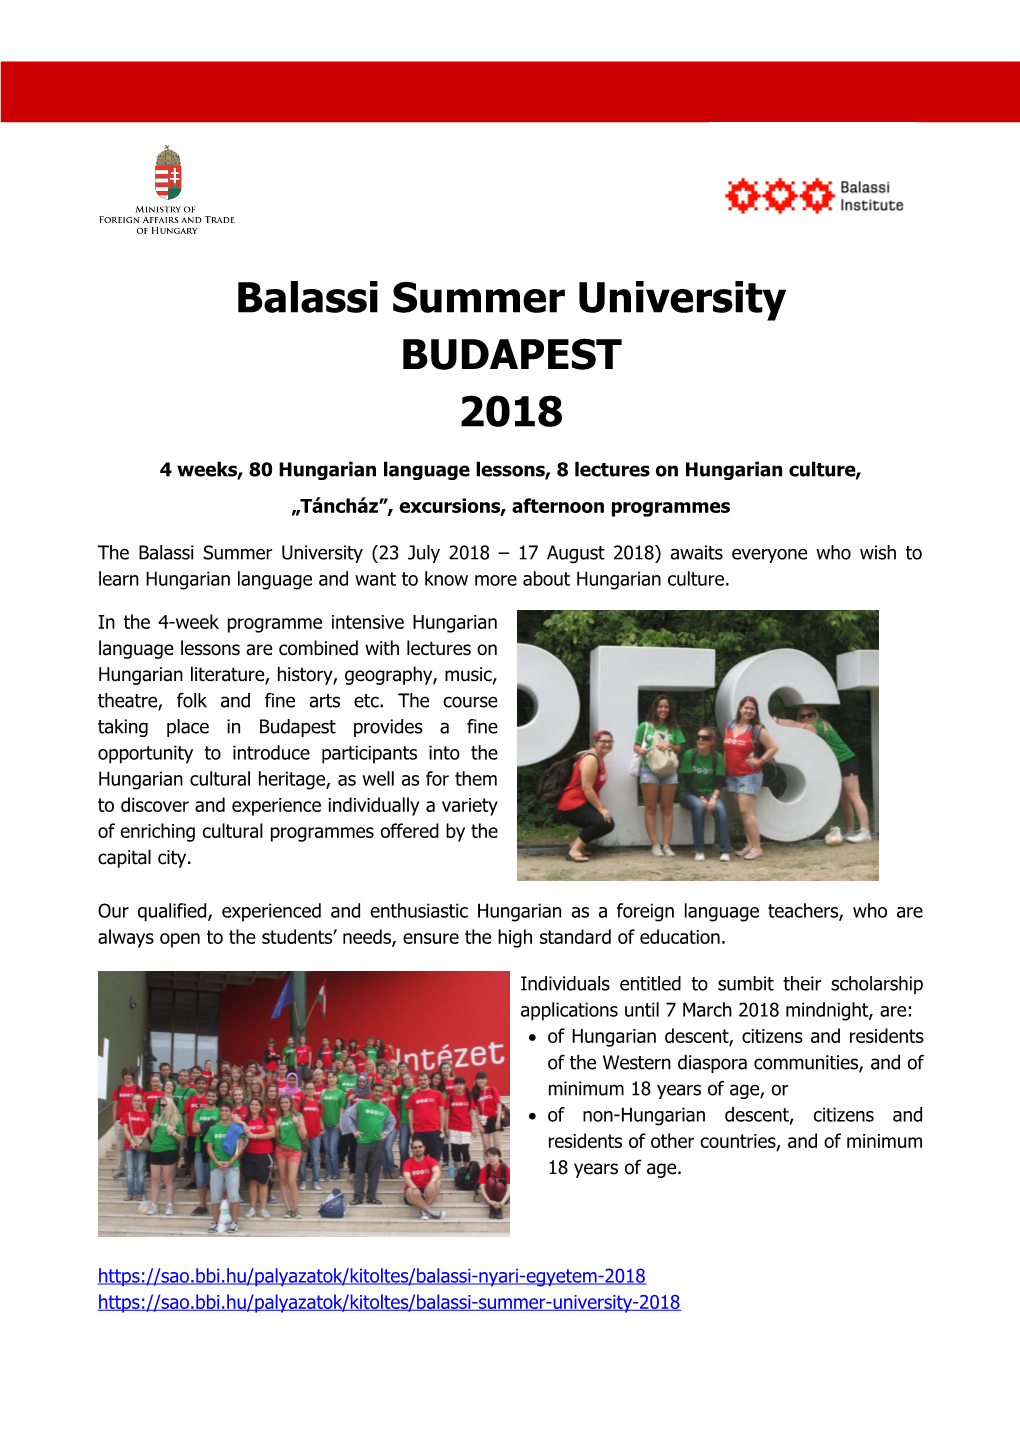 Balassi Summer University Budapest